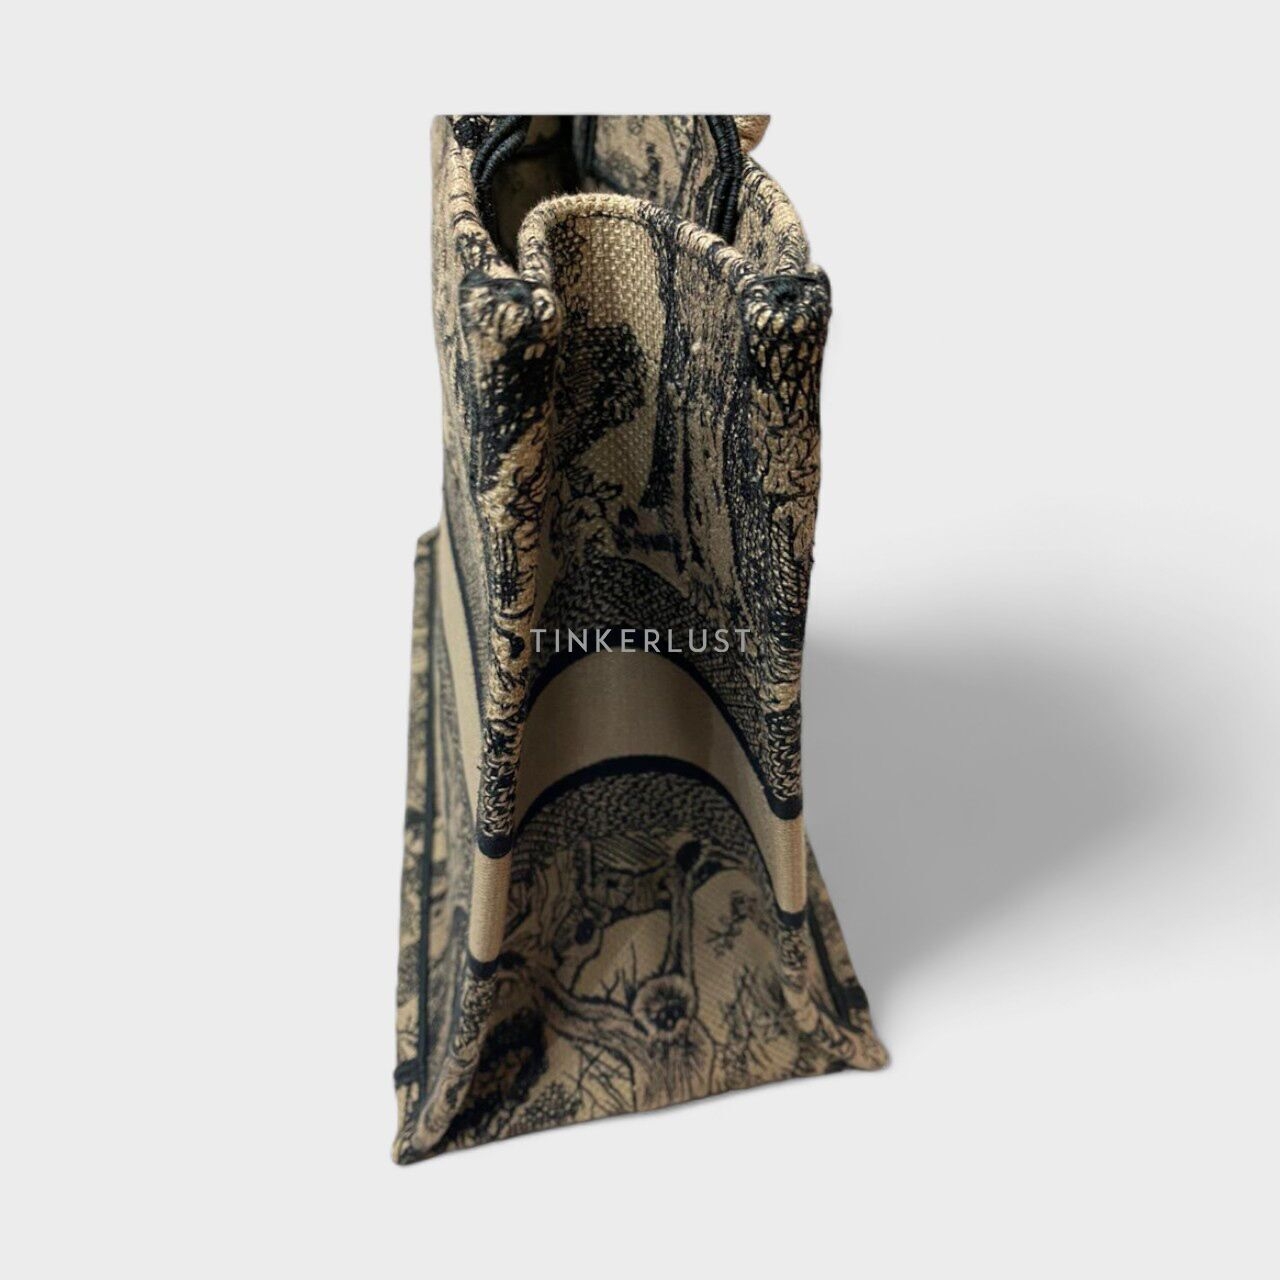 Christian Dior Book Tote Medium Embroidered Canvas Tote Bag